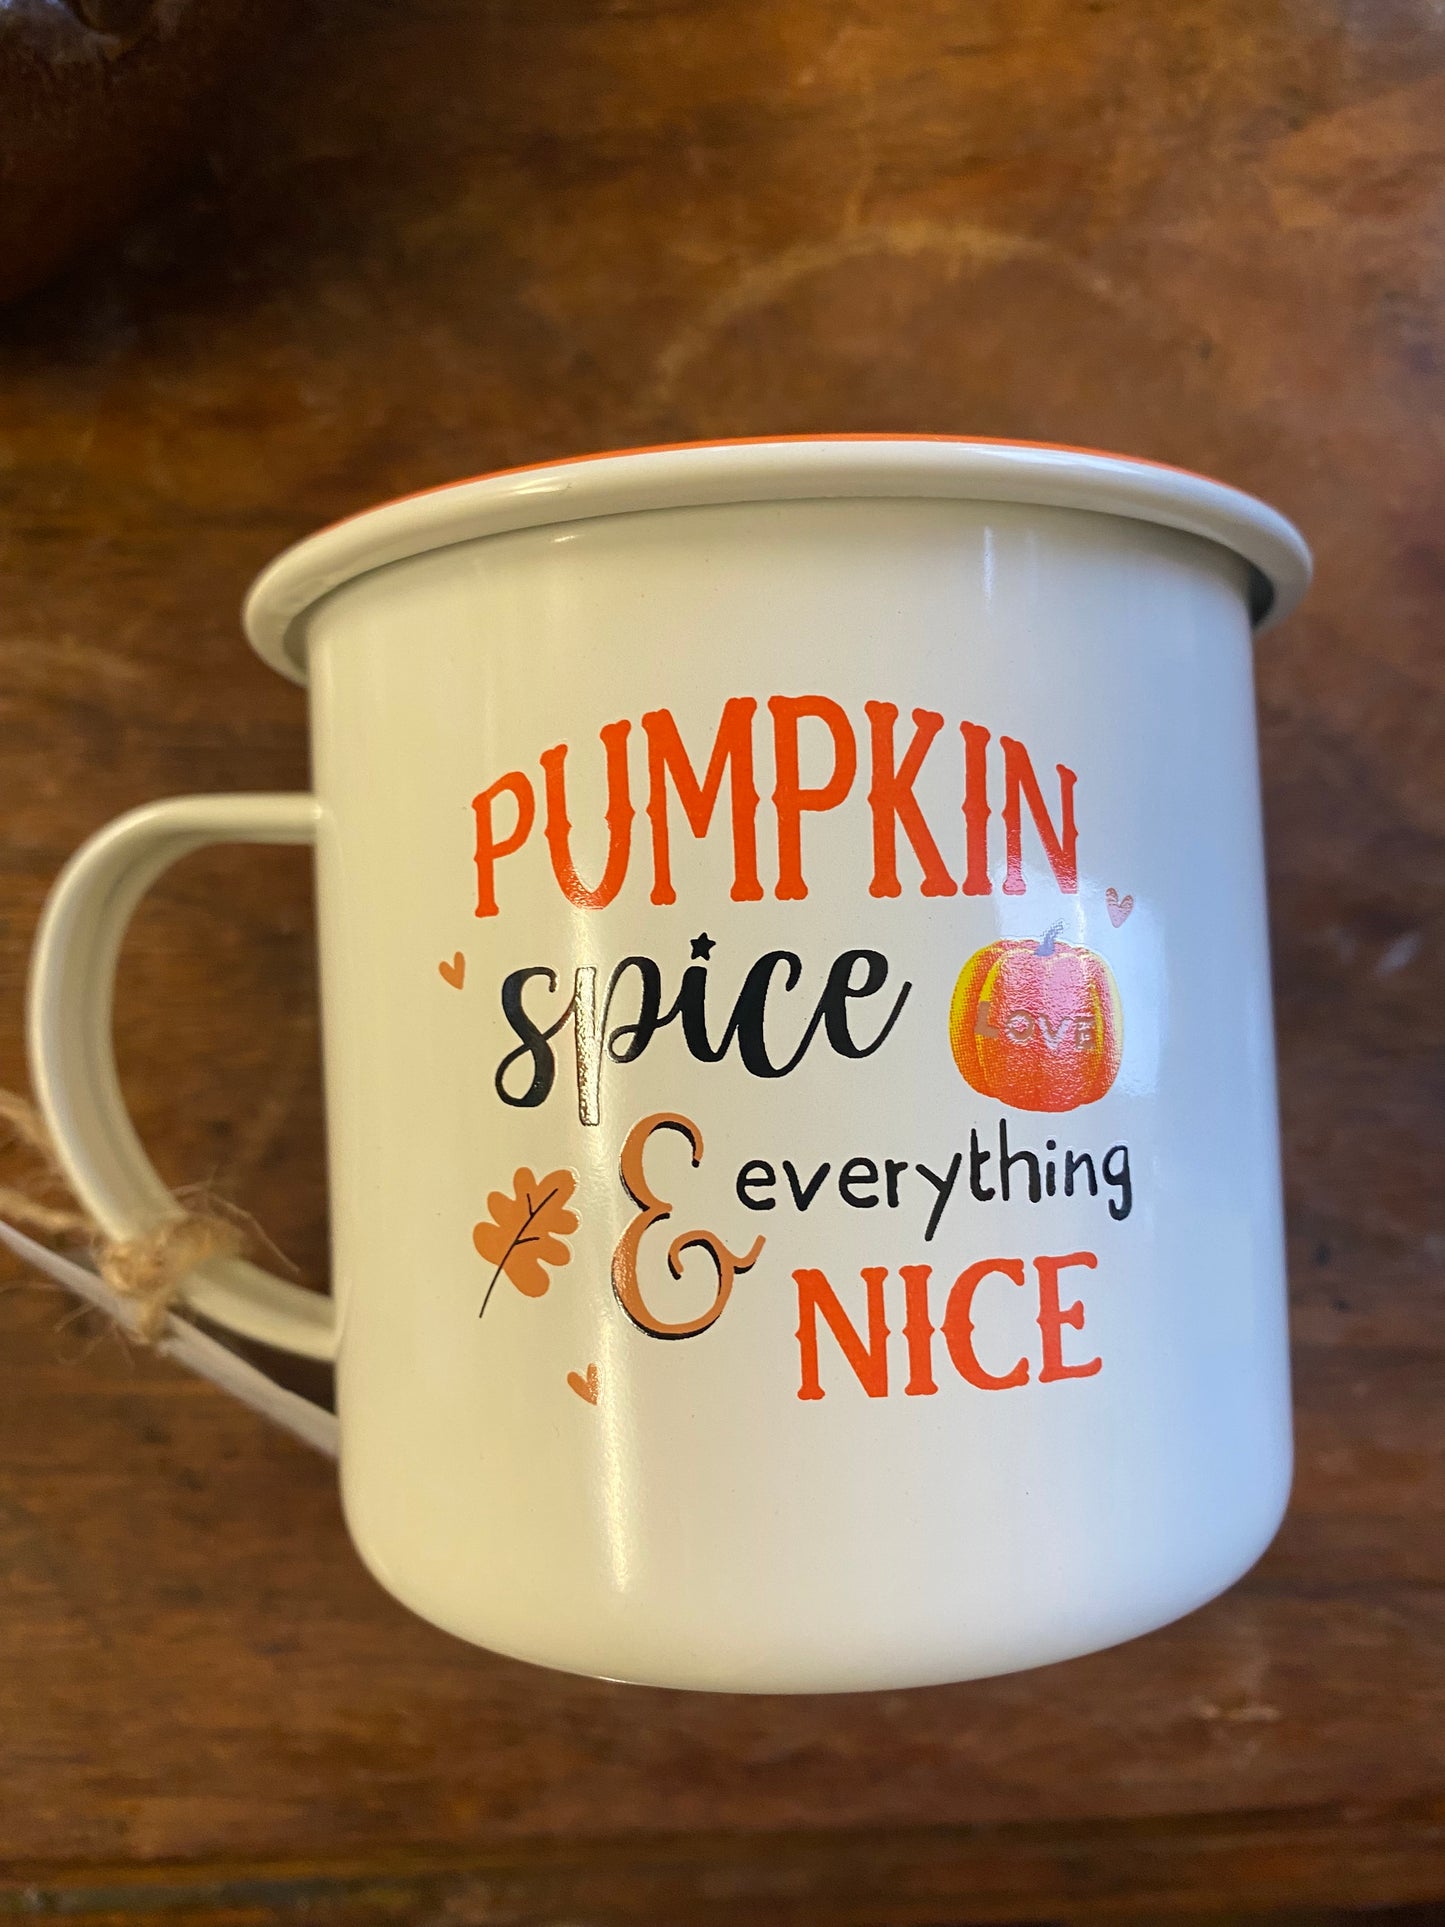 Pumpkin spice and everything nice enamel mug